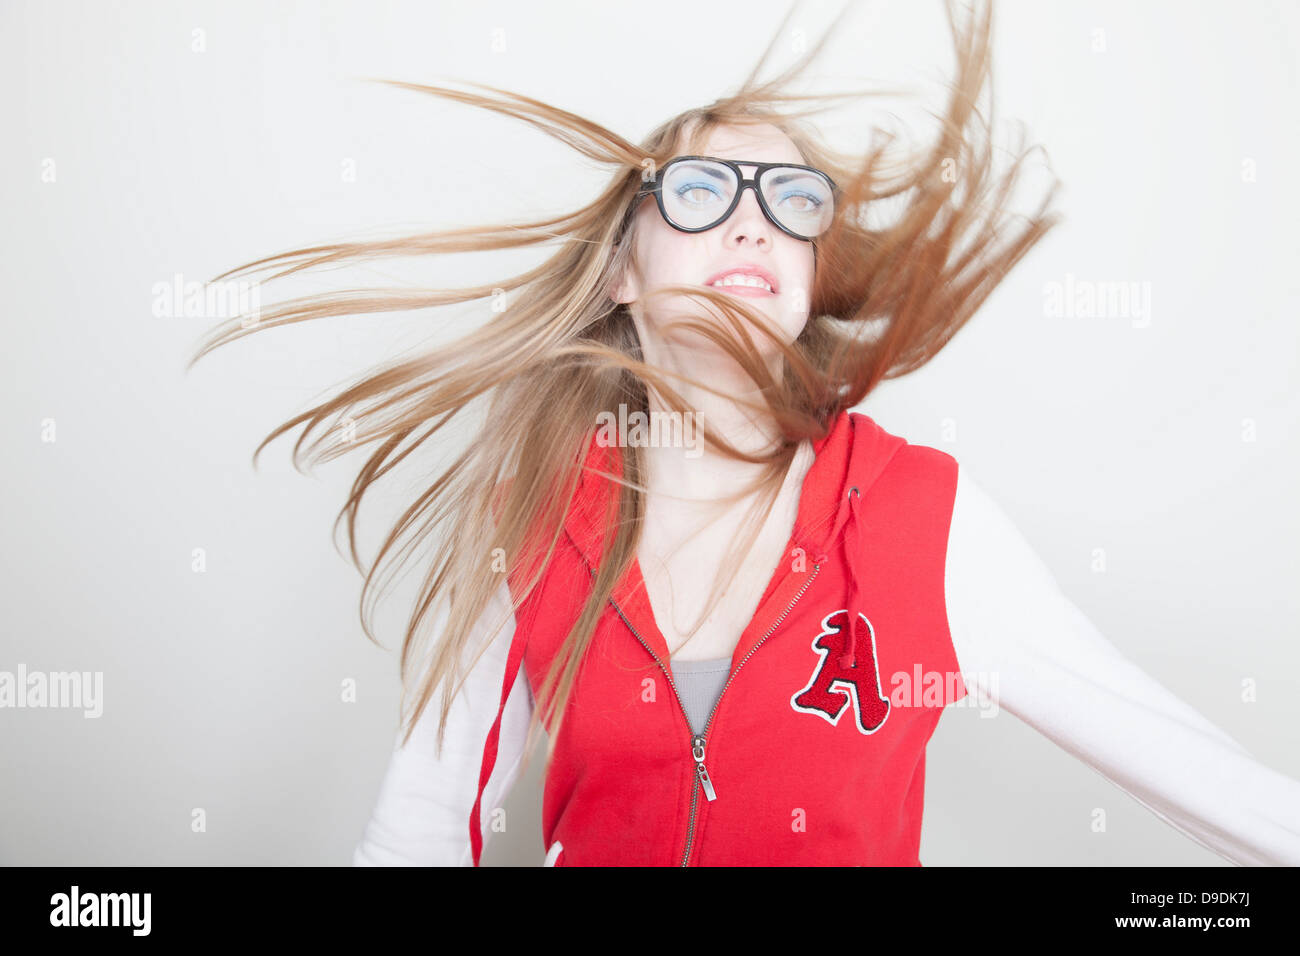 Girl wearing fake glasses swinging hair Stock Photo